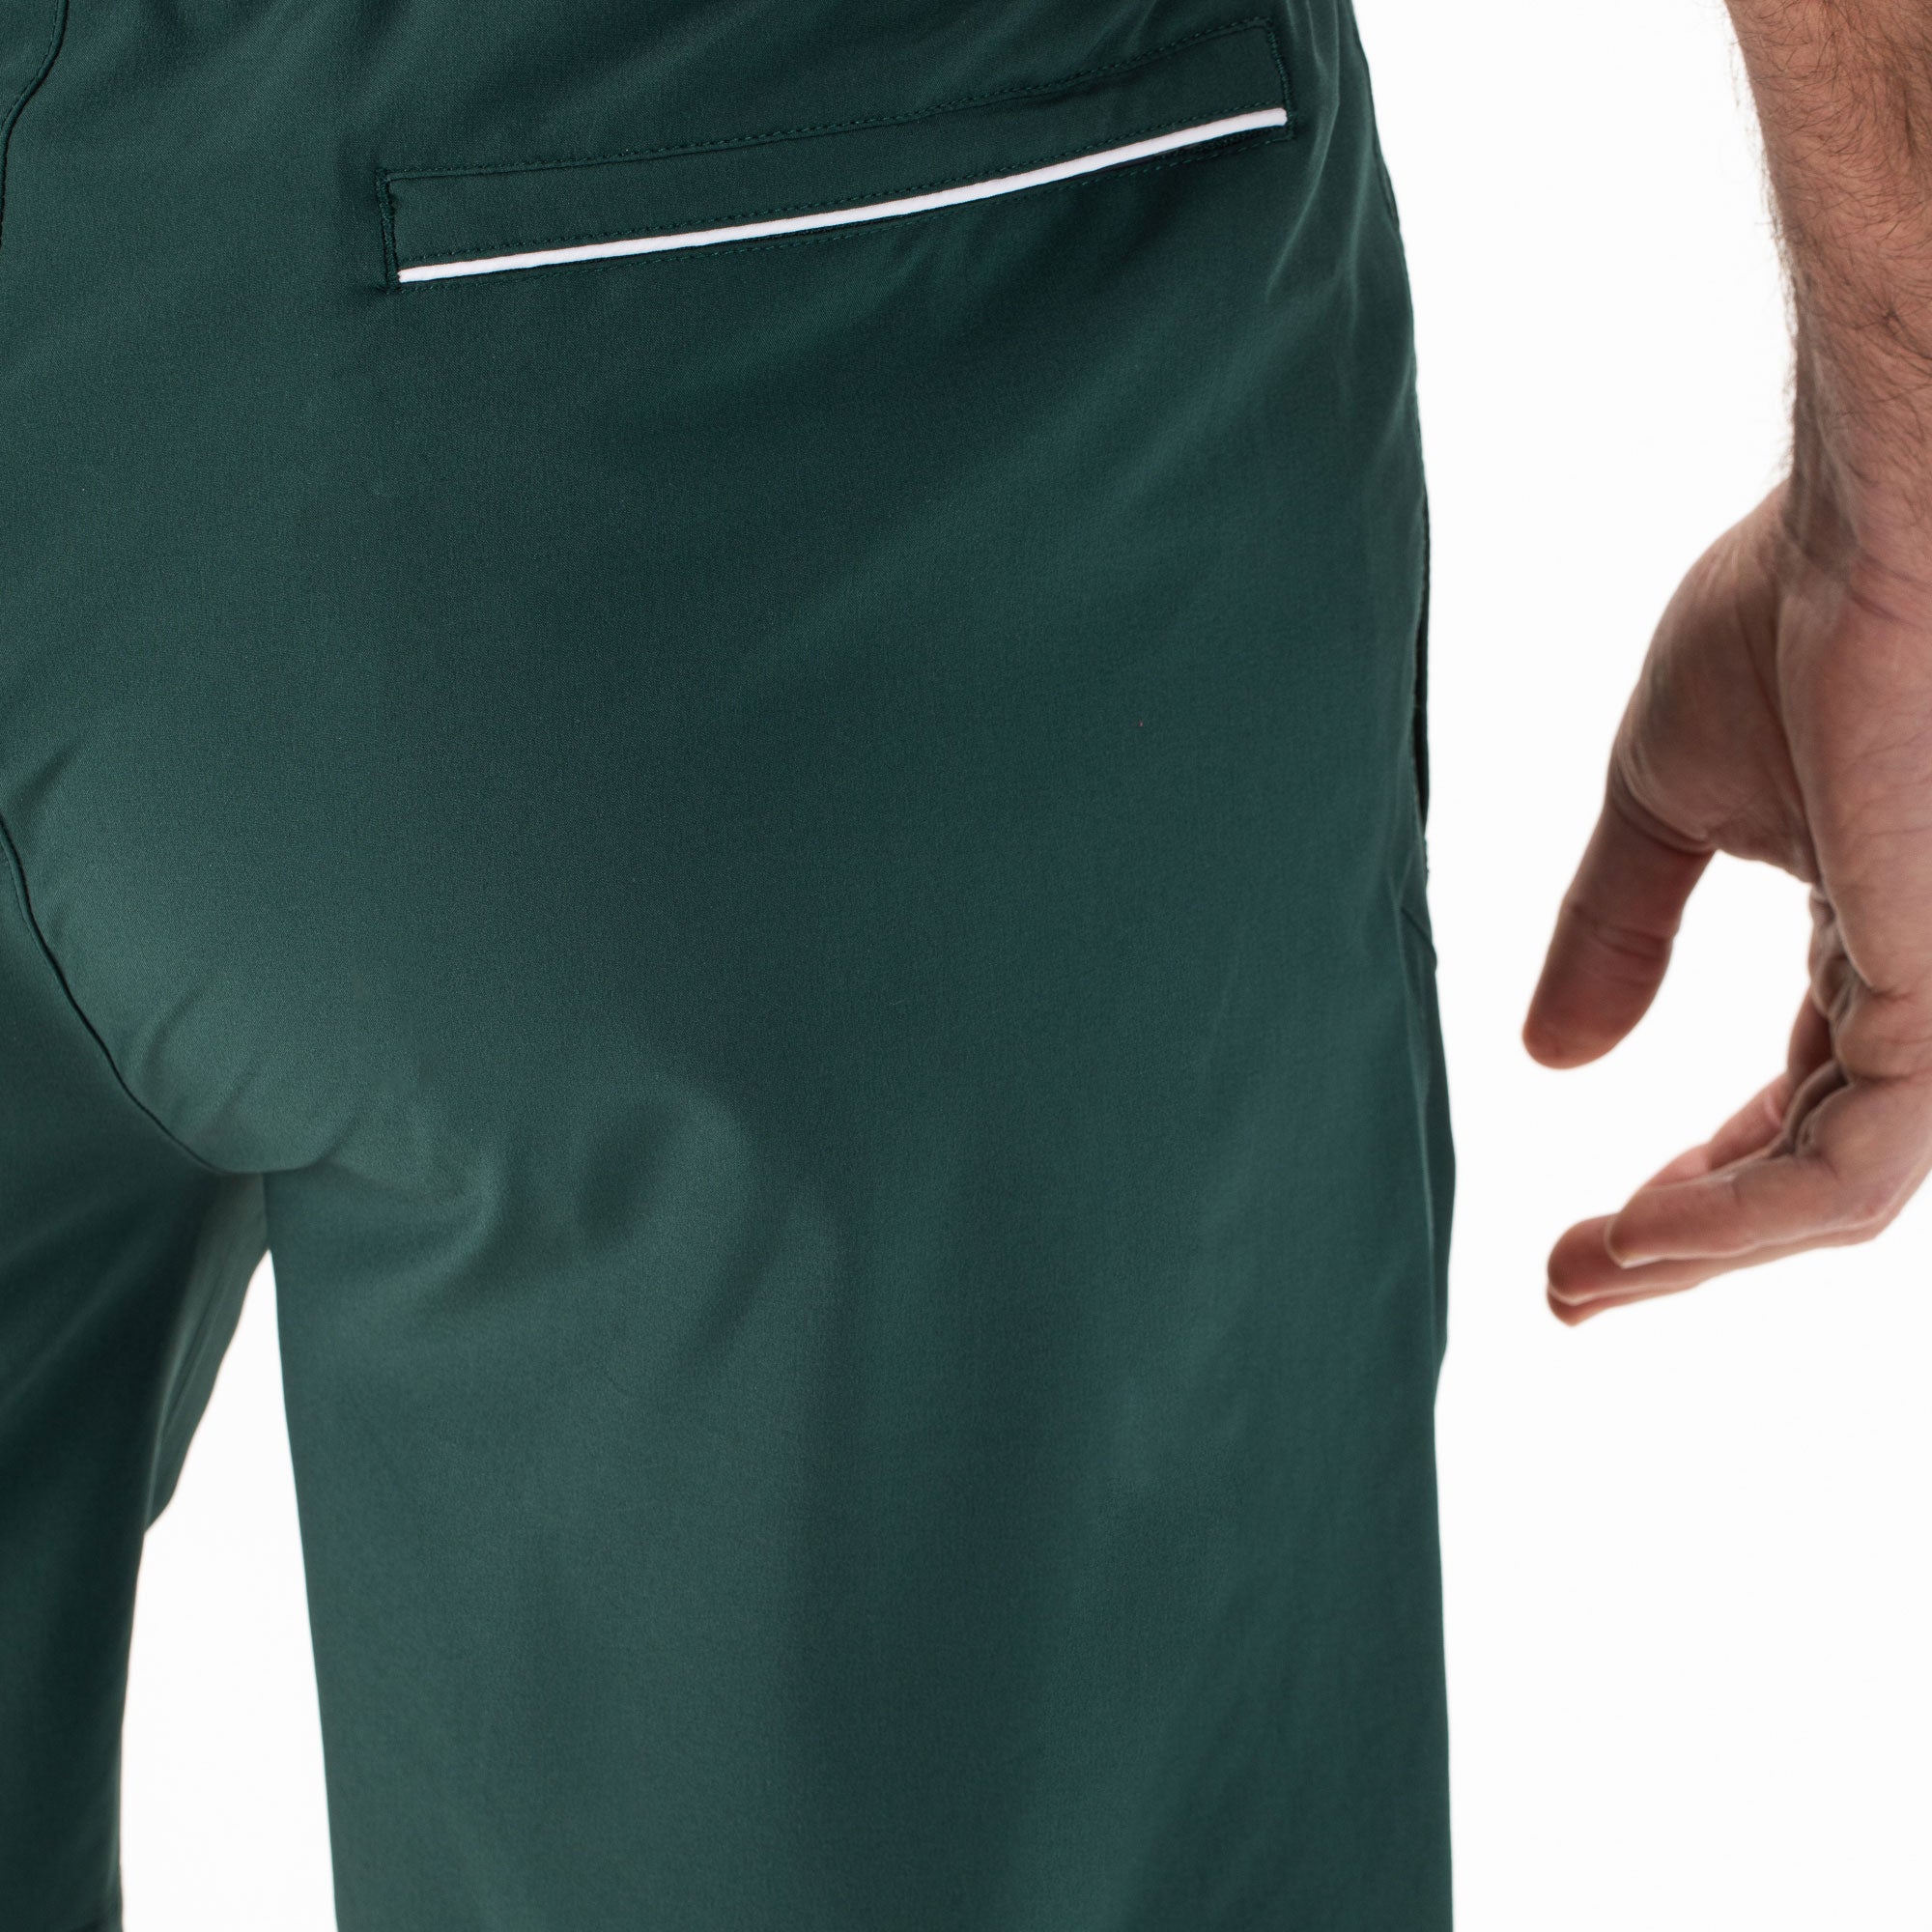 Sjeng Sports Evron Men's Tennis Shorts - Green (4)